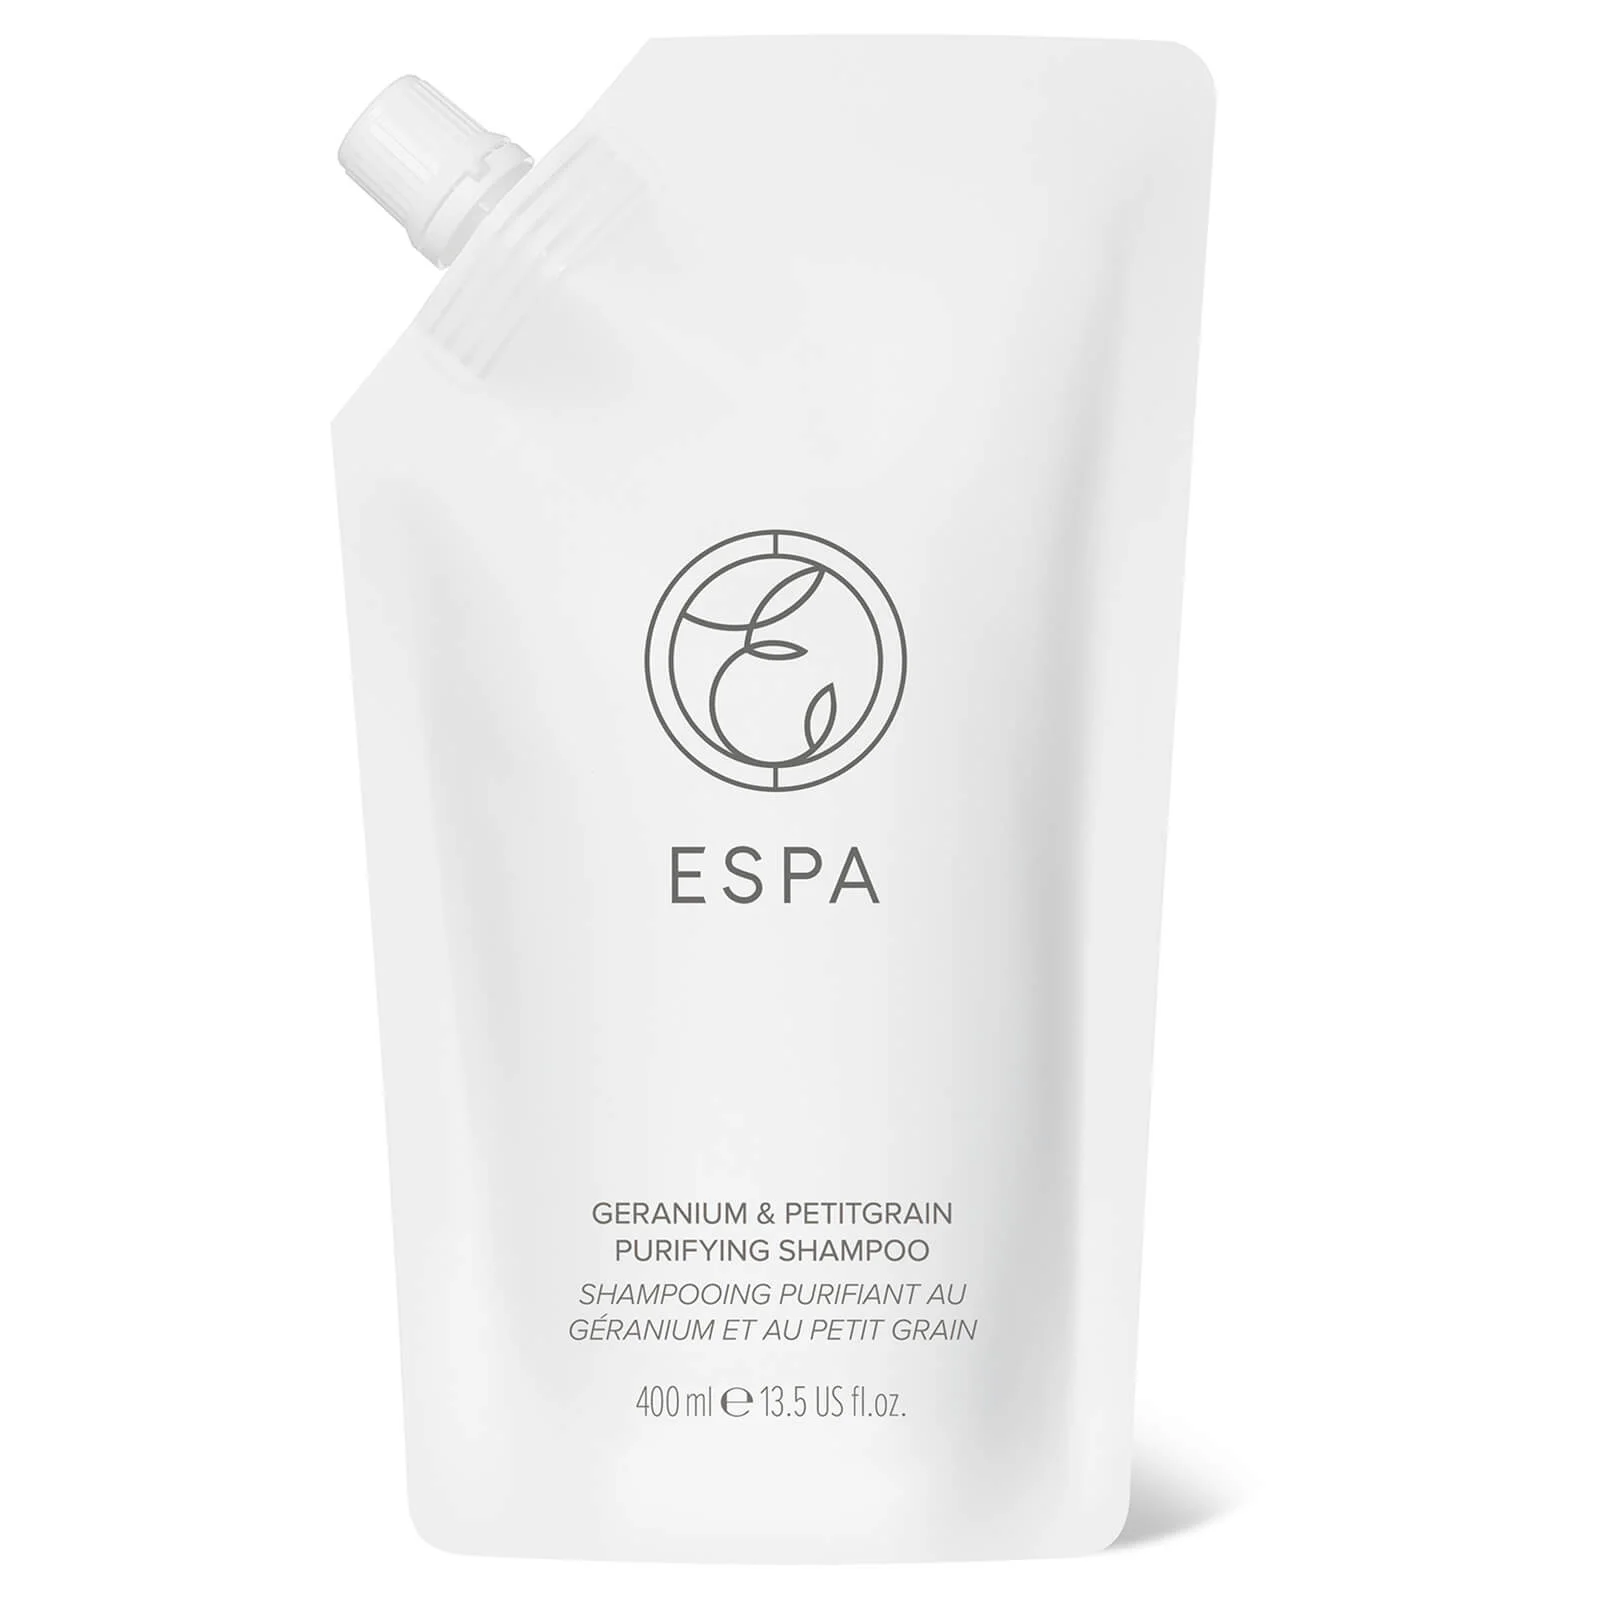 ESPA Geranium and Petitgrain Purifying Shampoo 400ml Image 1